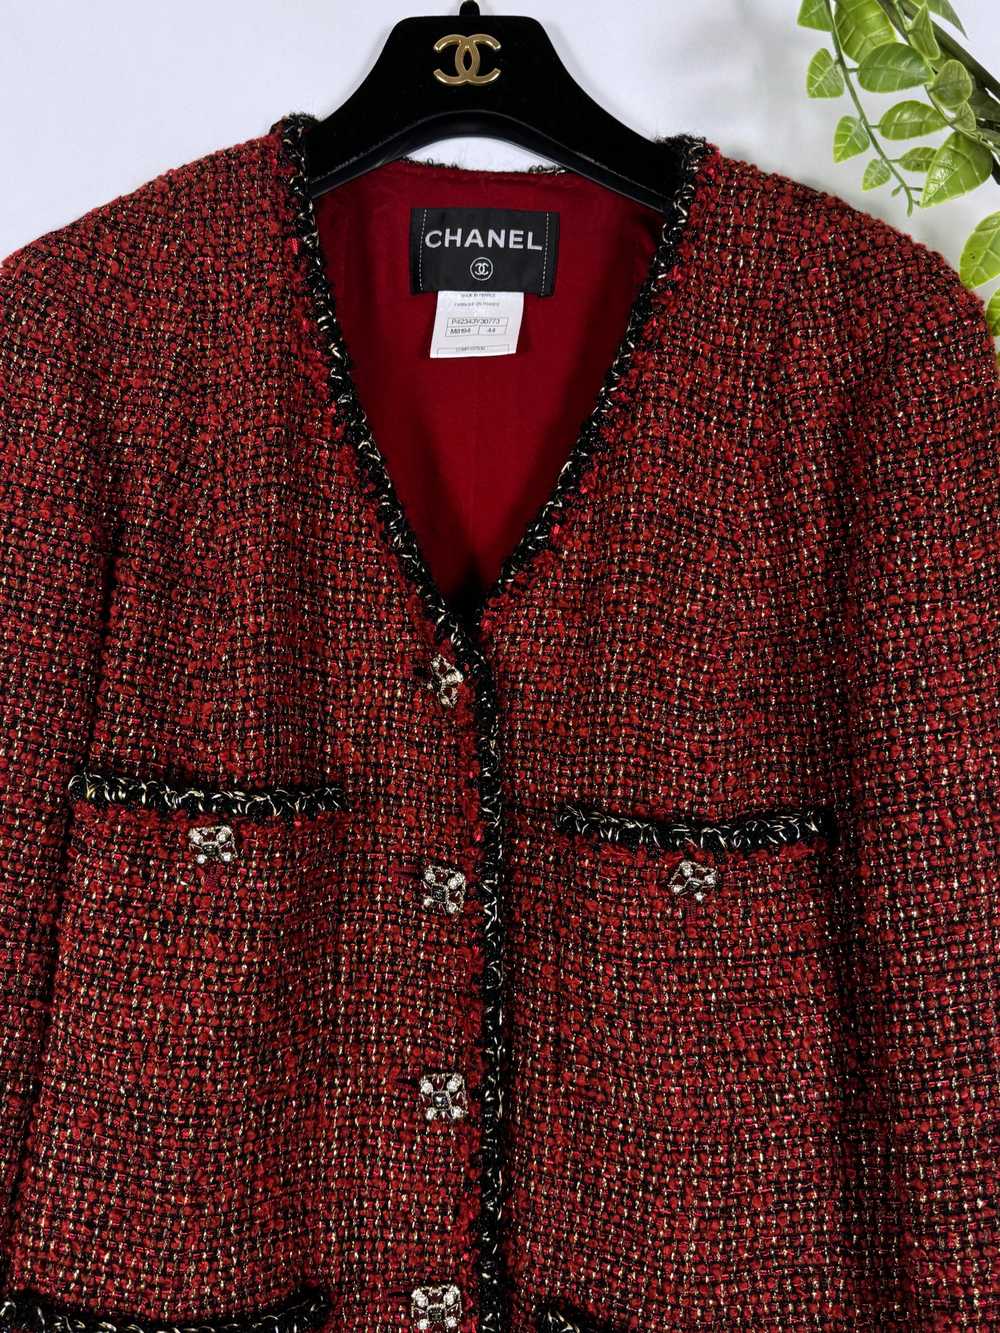 Product Details Chanel Red Lesage Tweed Jacket - image 7